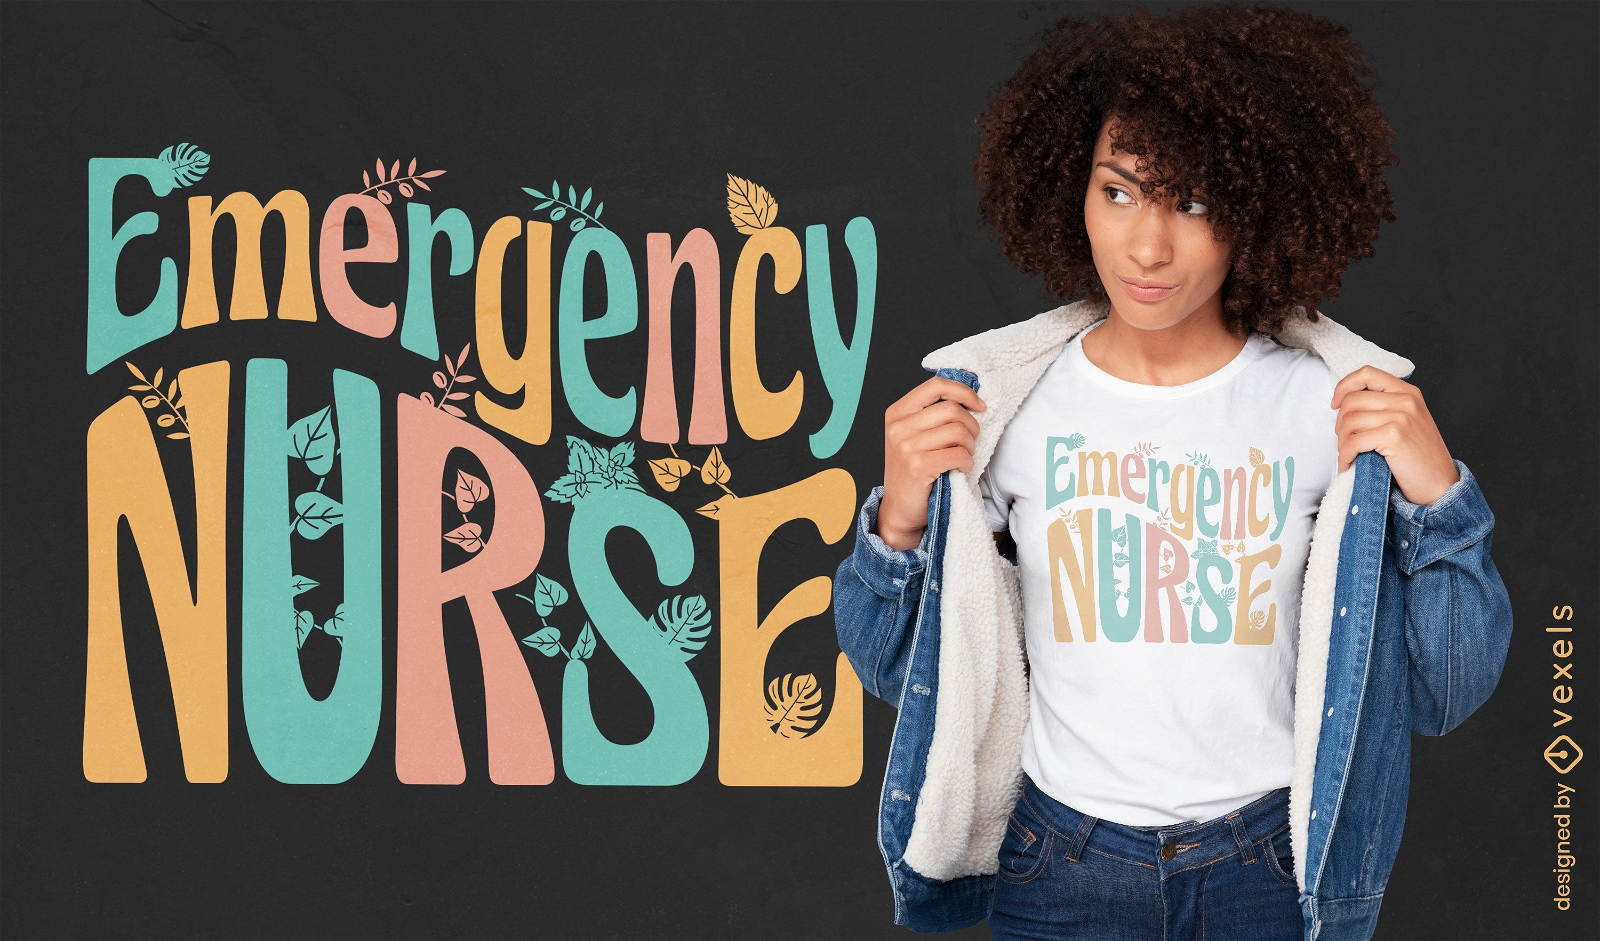 Emergency nurse lettering t-shirt design